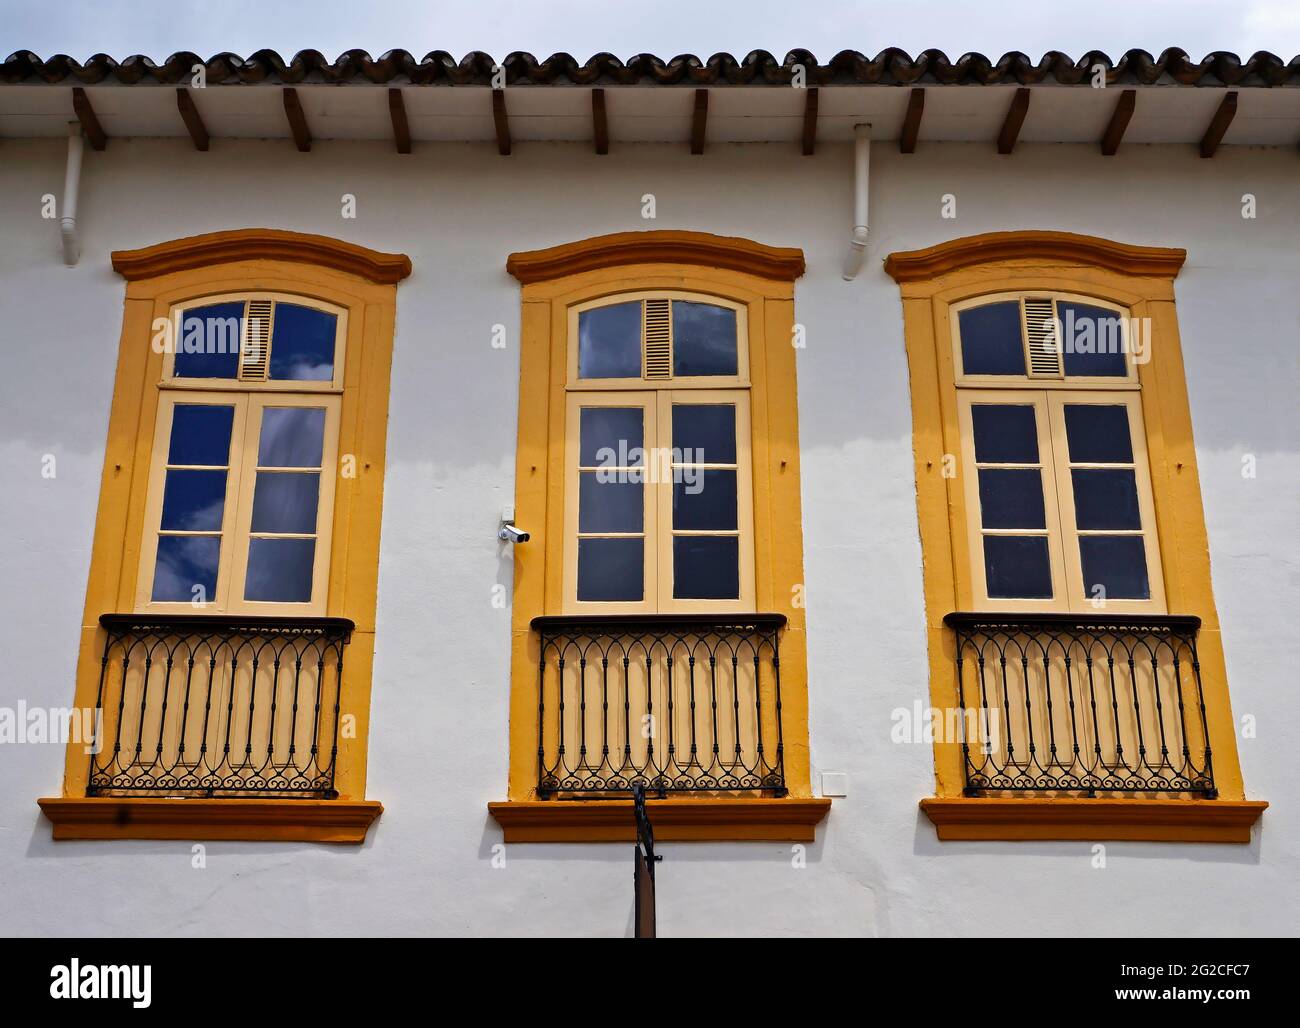 Colonial balconies on facade in Sao Joao del Rei, Brazil Stock Photo